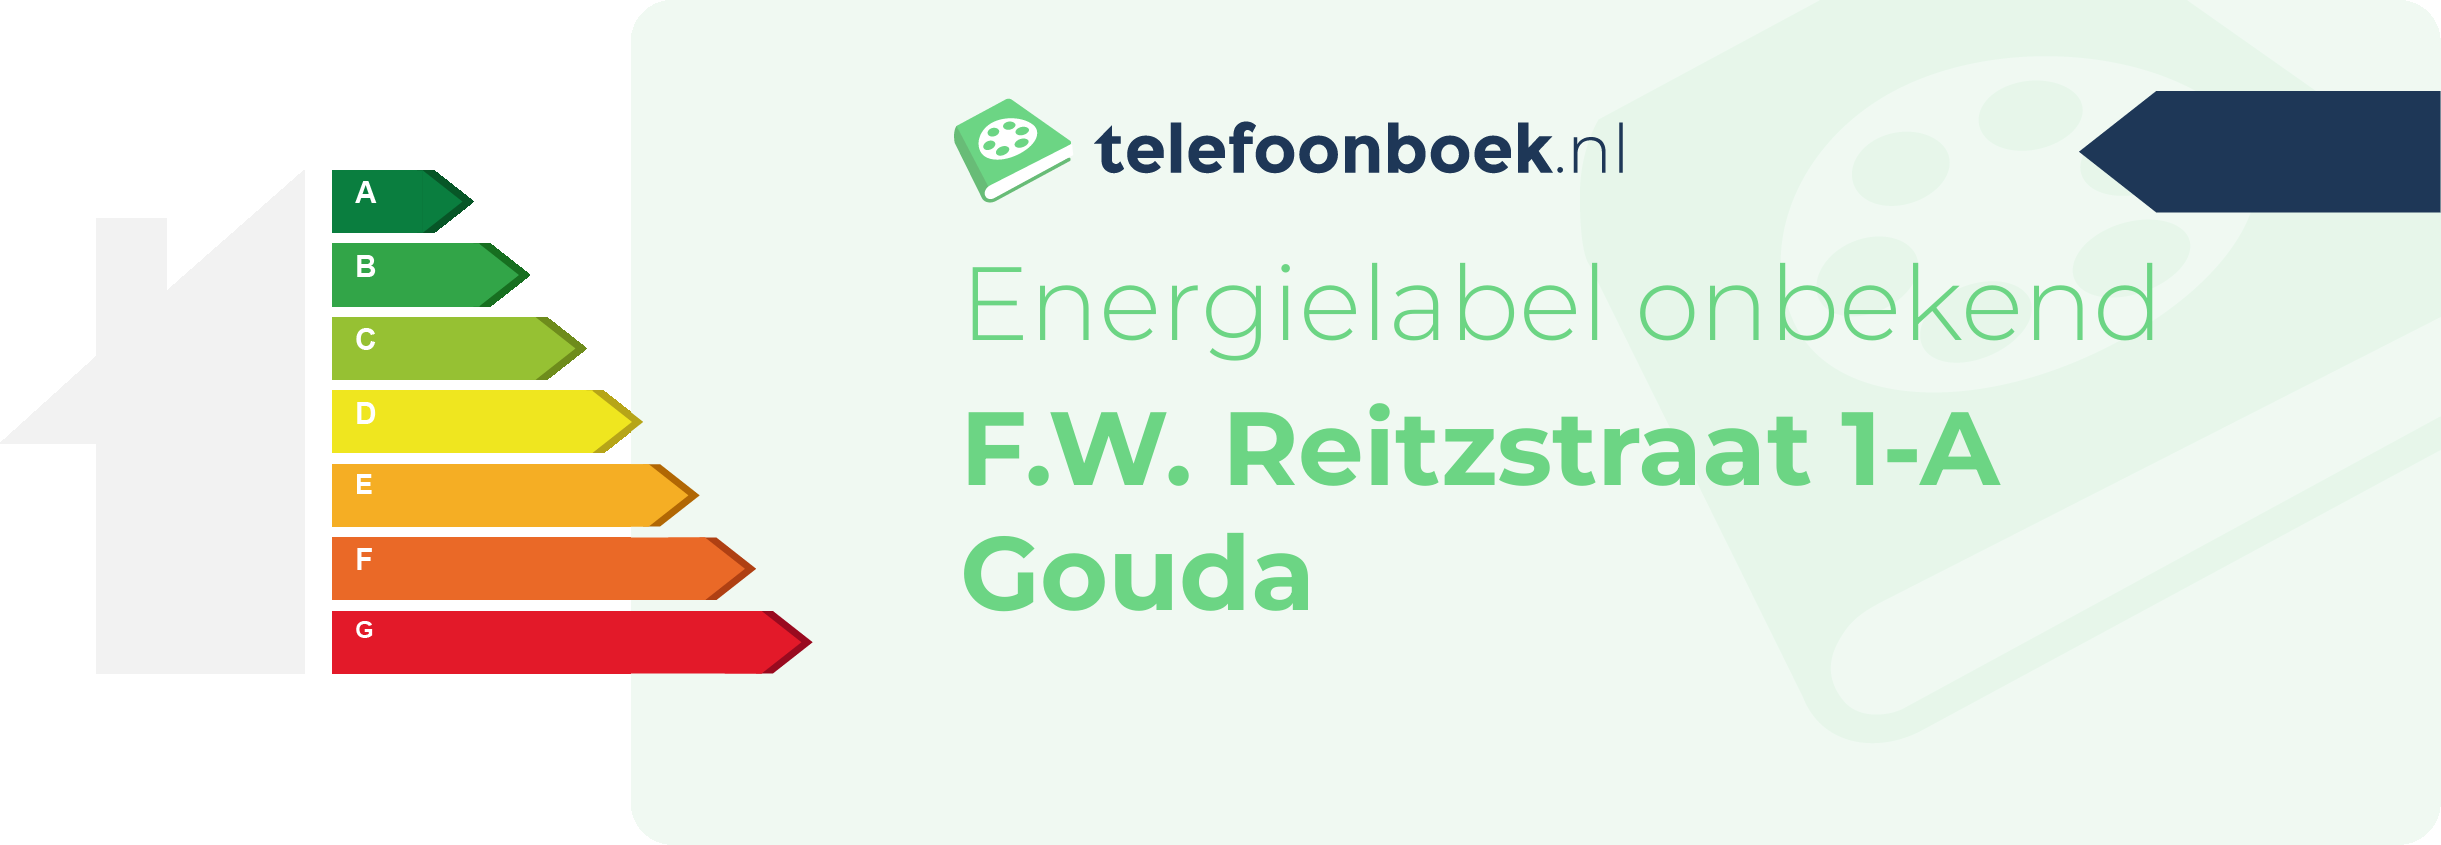 Energielabel F.W. Reitzstraat 1-A Gouda